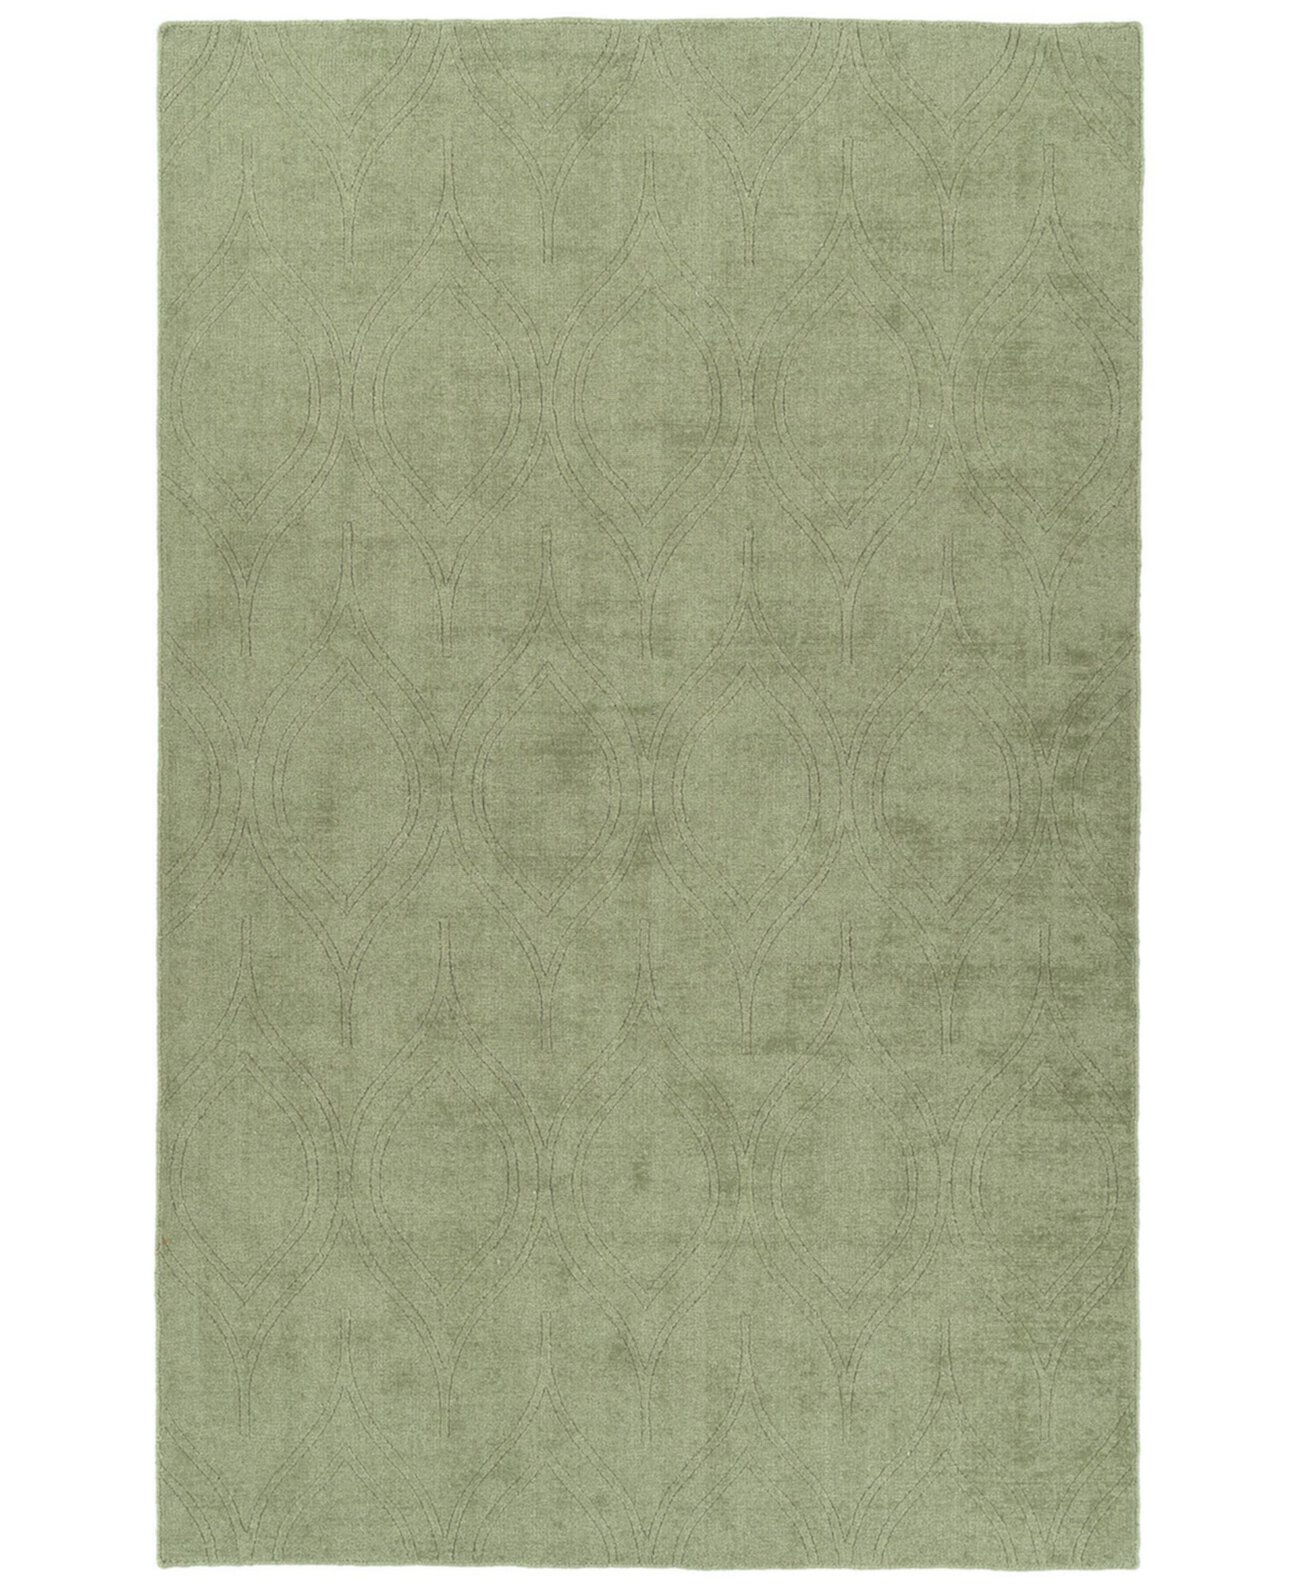 Minkah MKH01-23 Оливковый коврик для улицы размером 2 x 3 дюйма Kaleen